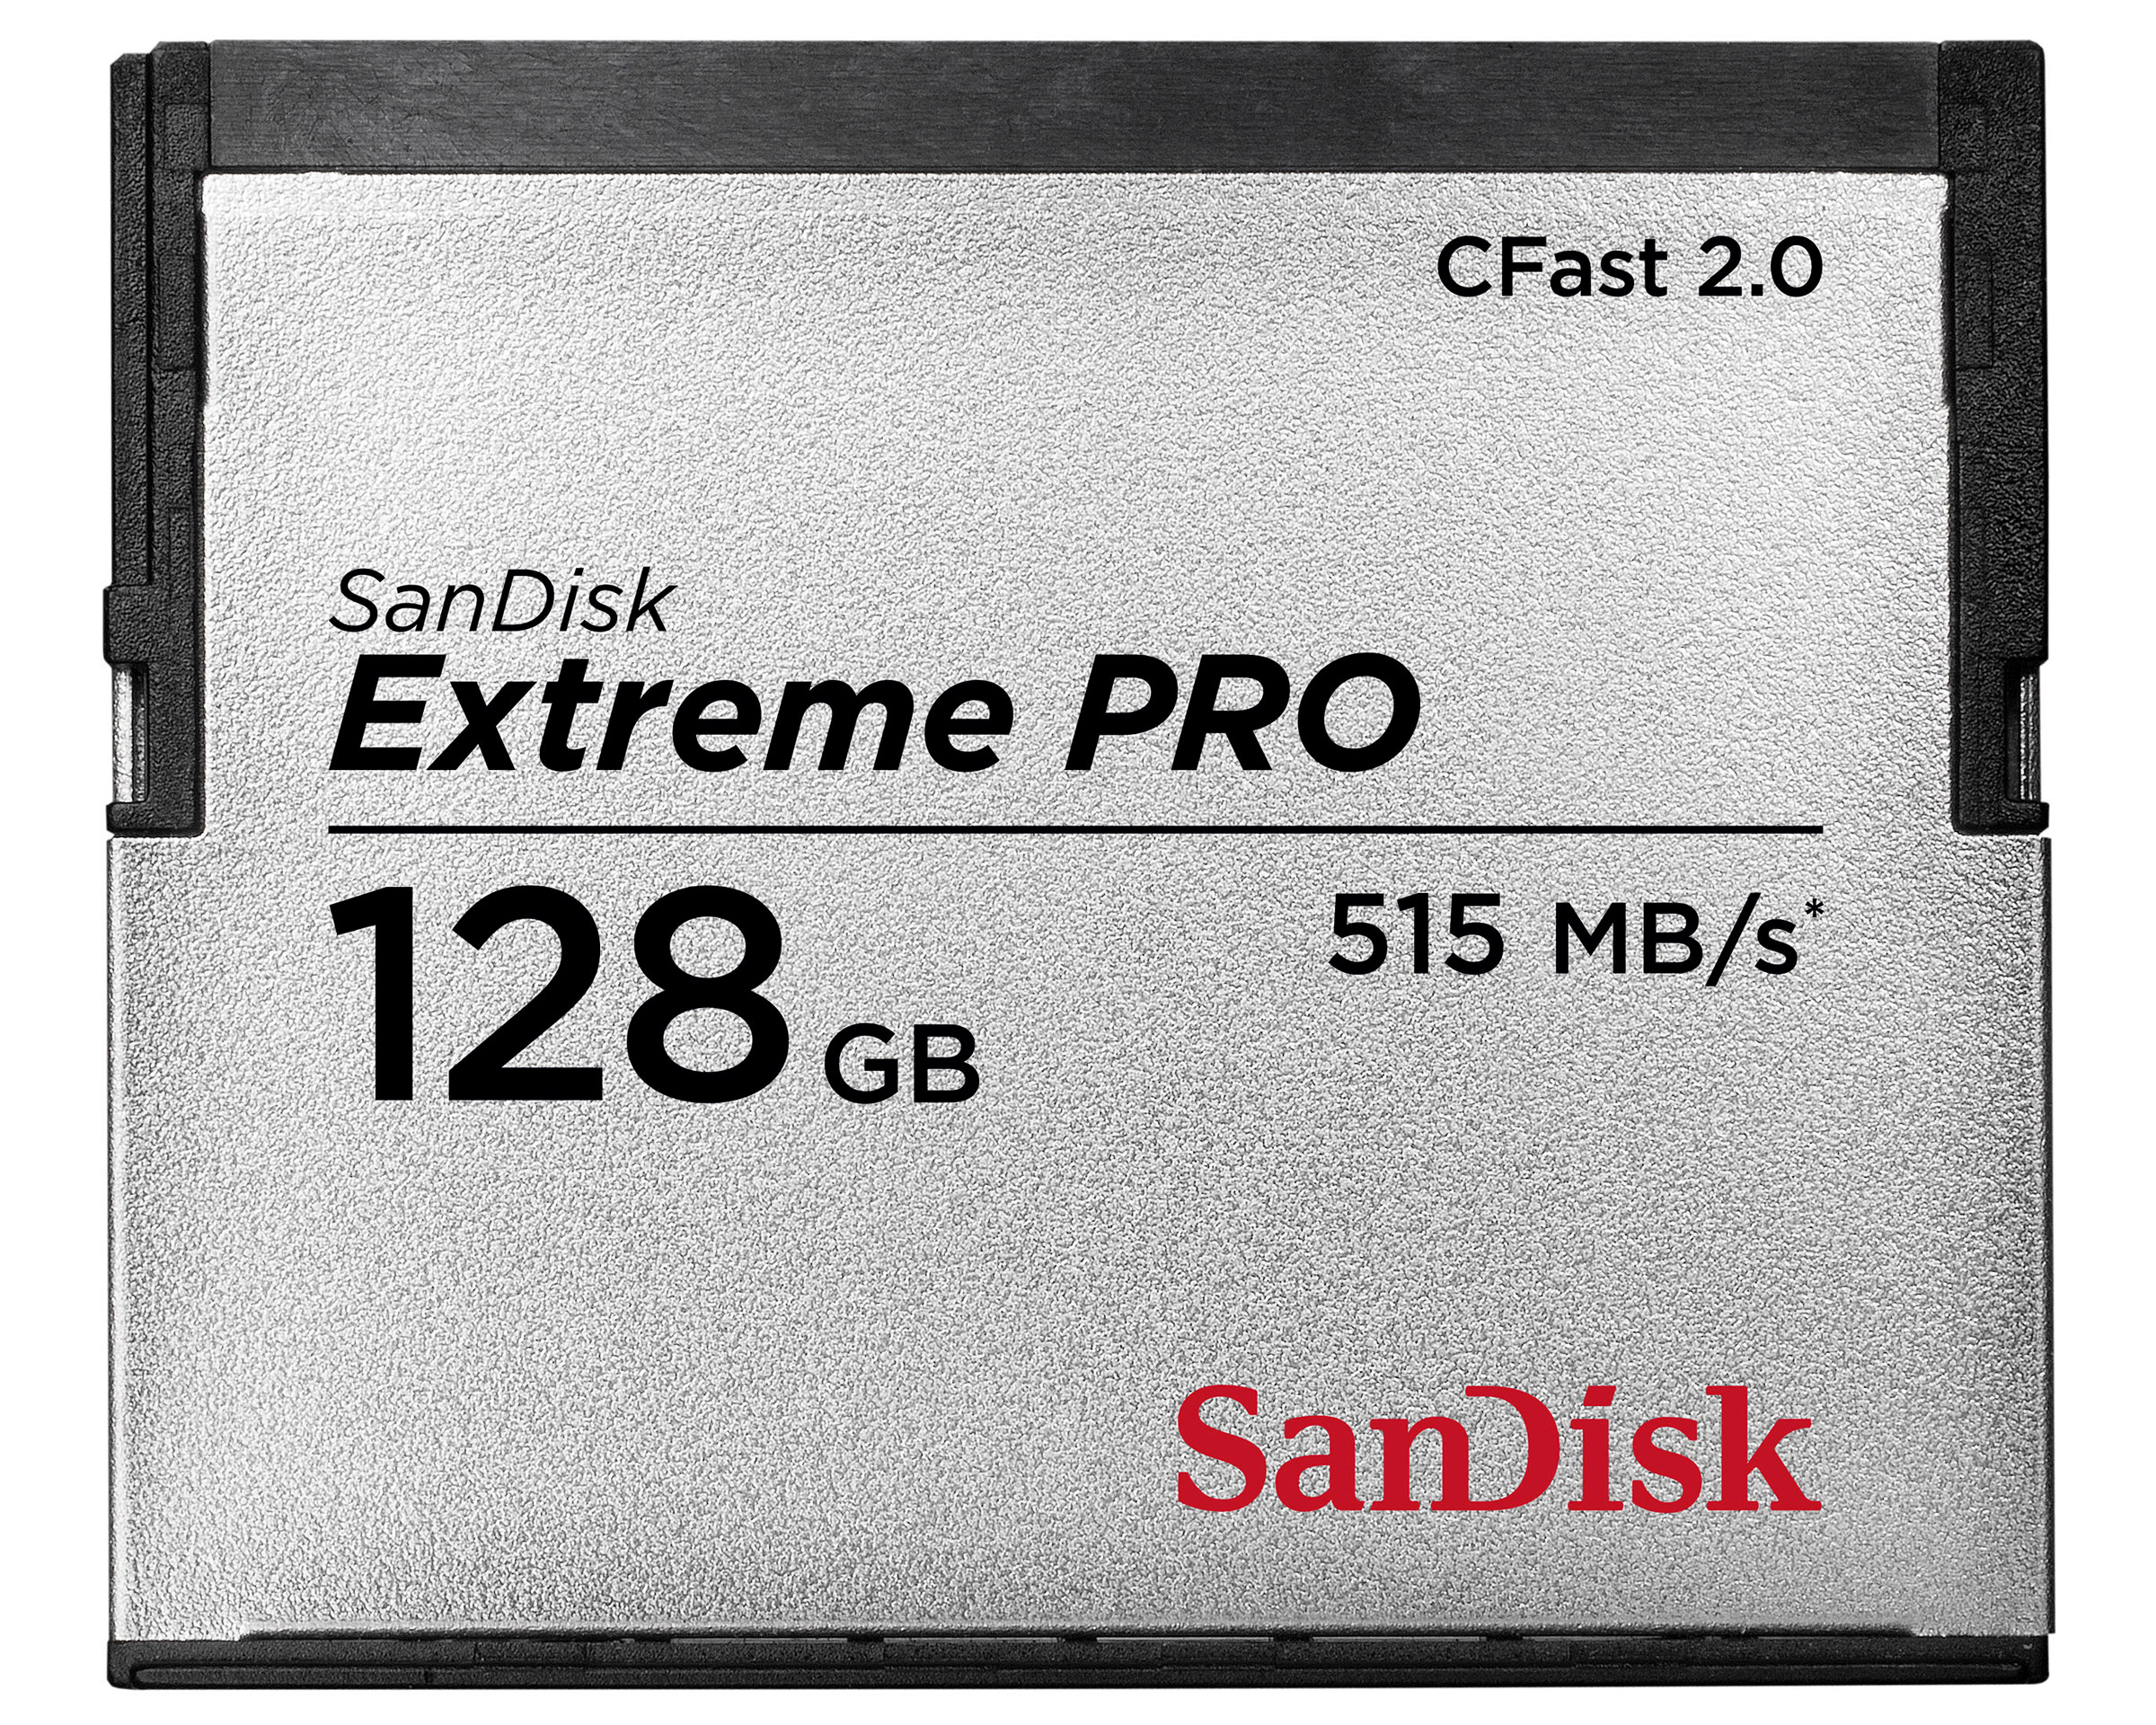 Sandisk Extreme Pro CFast 2.0 128 GB (515 MB/s)